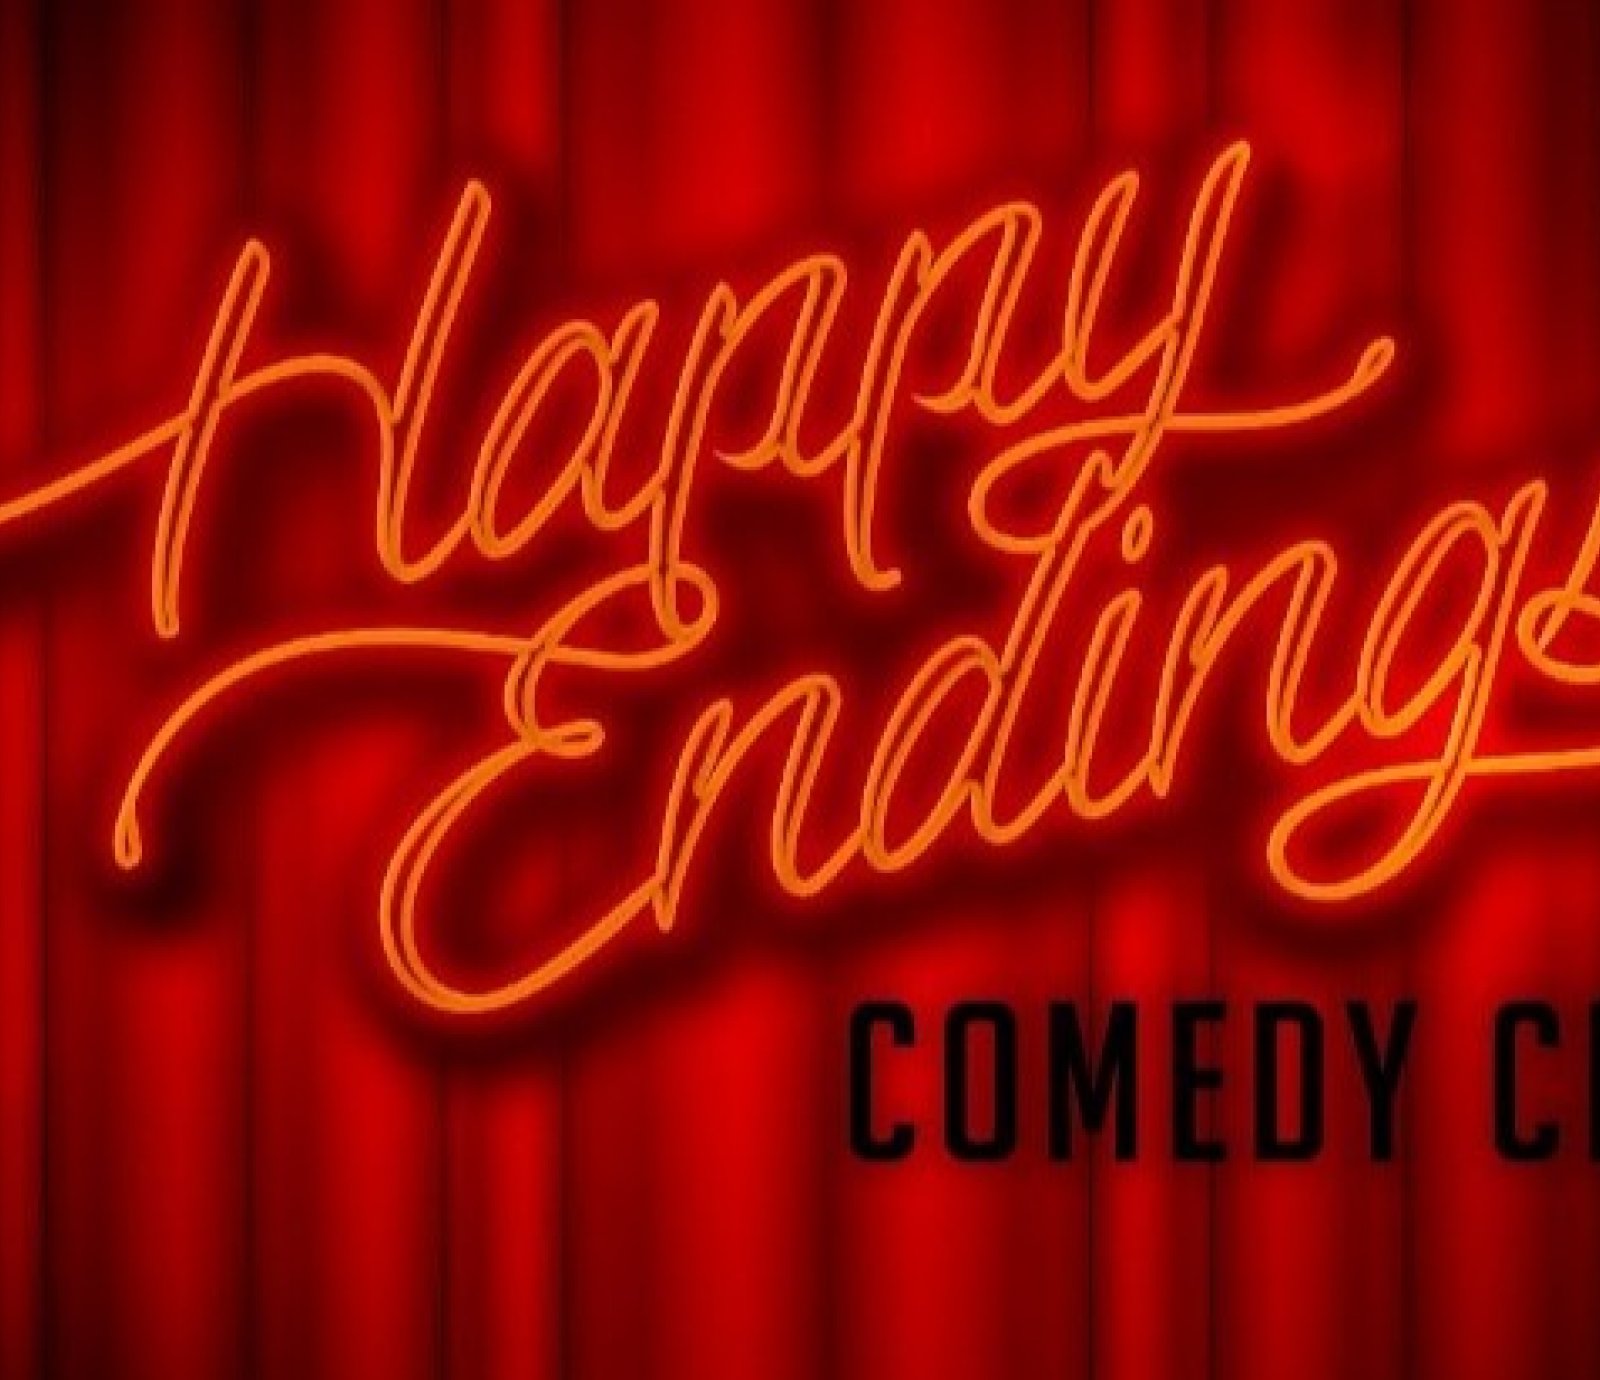 Happy Endings Comedy Club